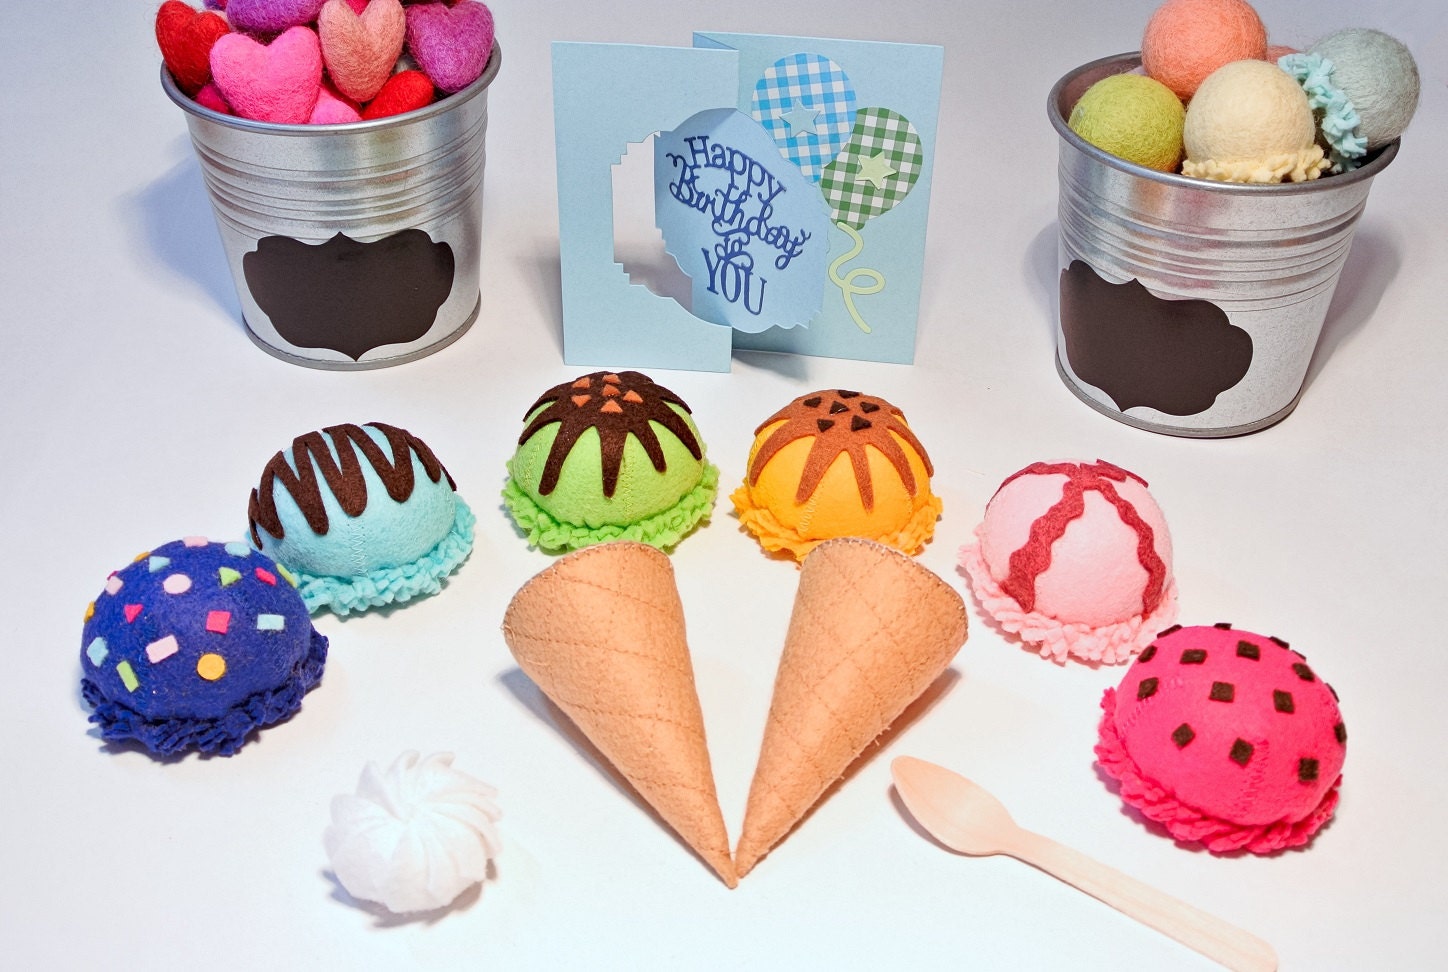 Ice Cream DIY Felt Kit — DIY Craft Kits for Every Skill Level